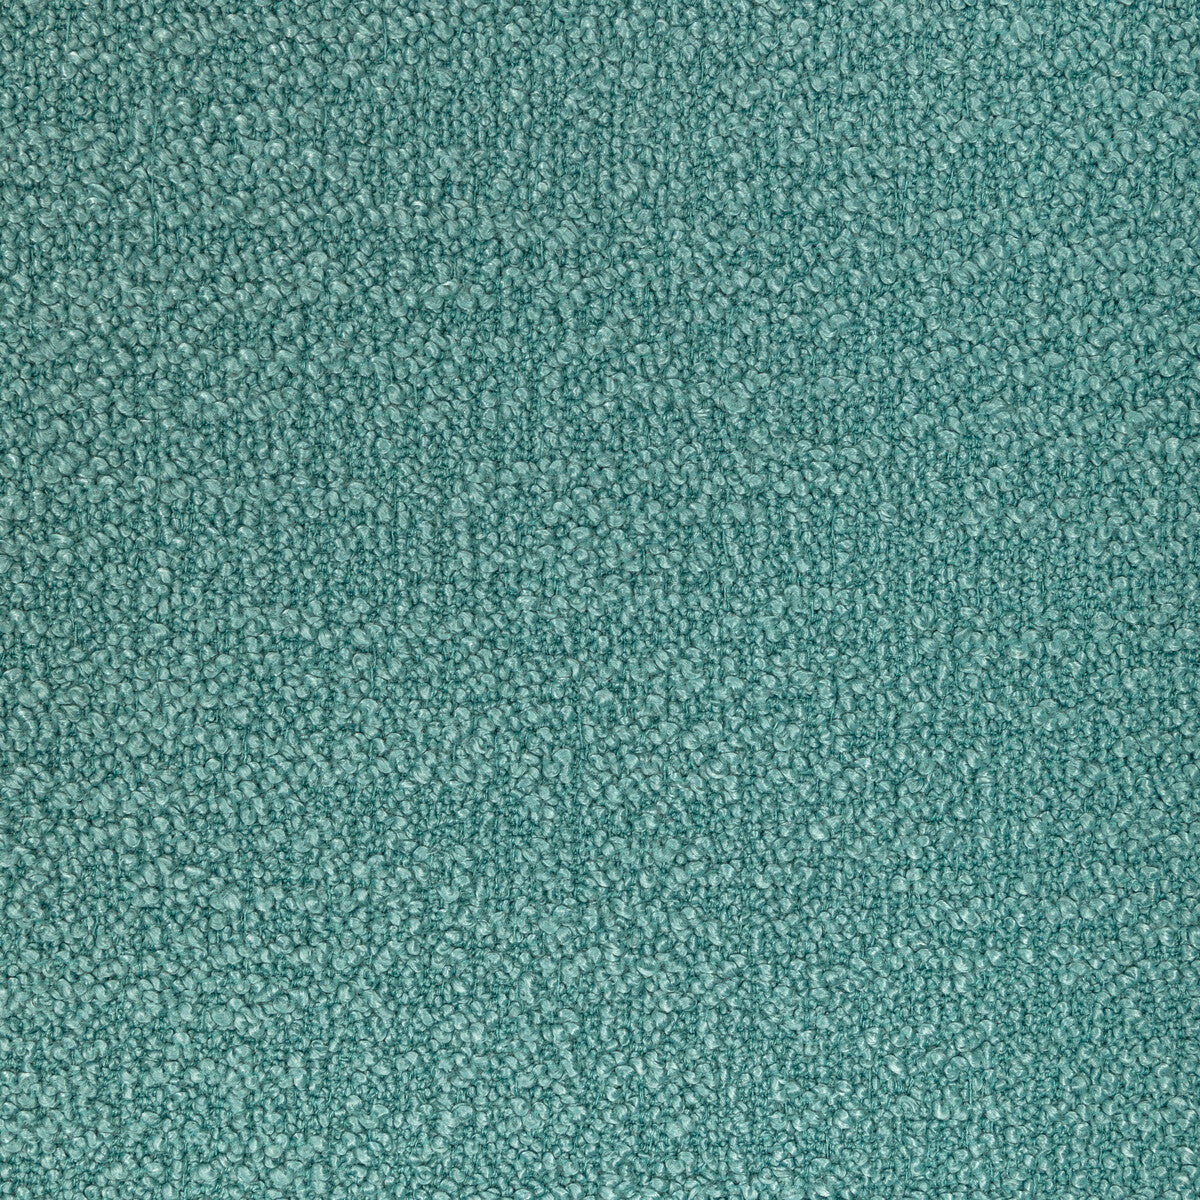 Kravet Smart fabric in 36857-13 color - pattern 36857.13.0 - by Kravet Smart in the Performance Kravetarmor collection